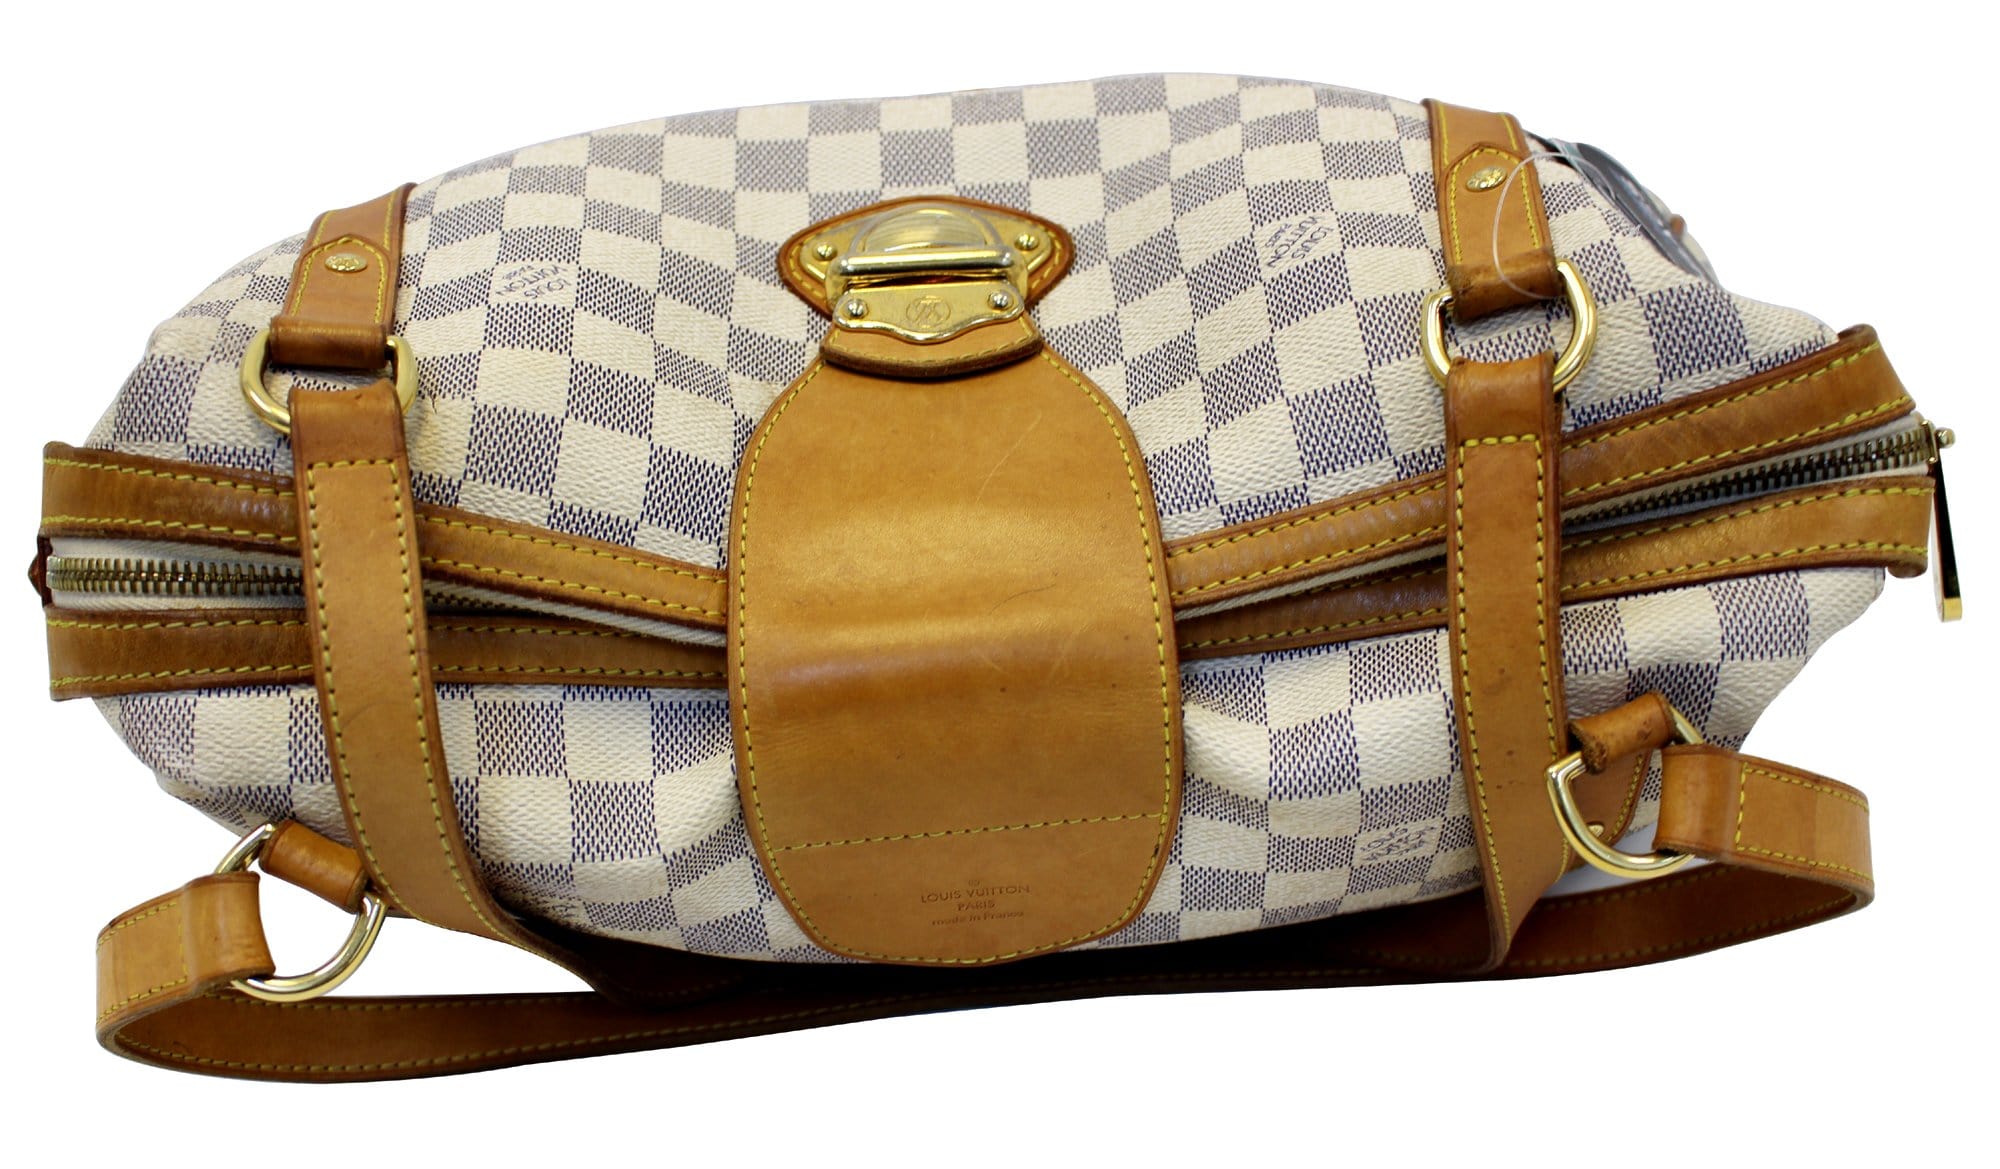 Louis Vuitton Tasche Bag Stresa Damier Azur Shopper